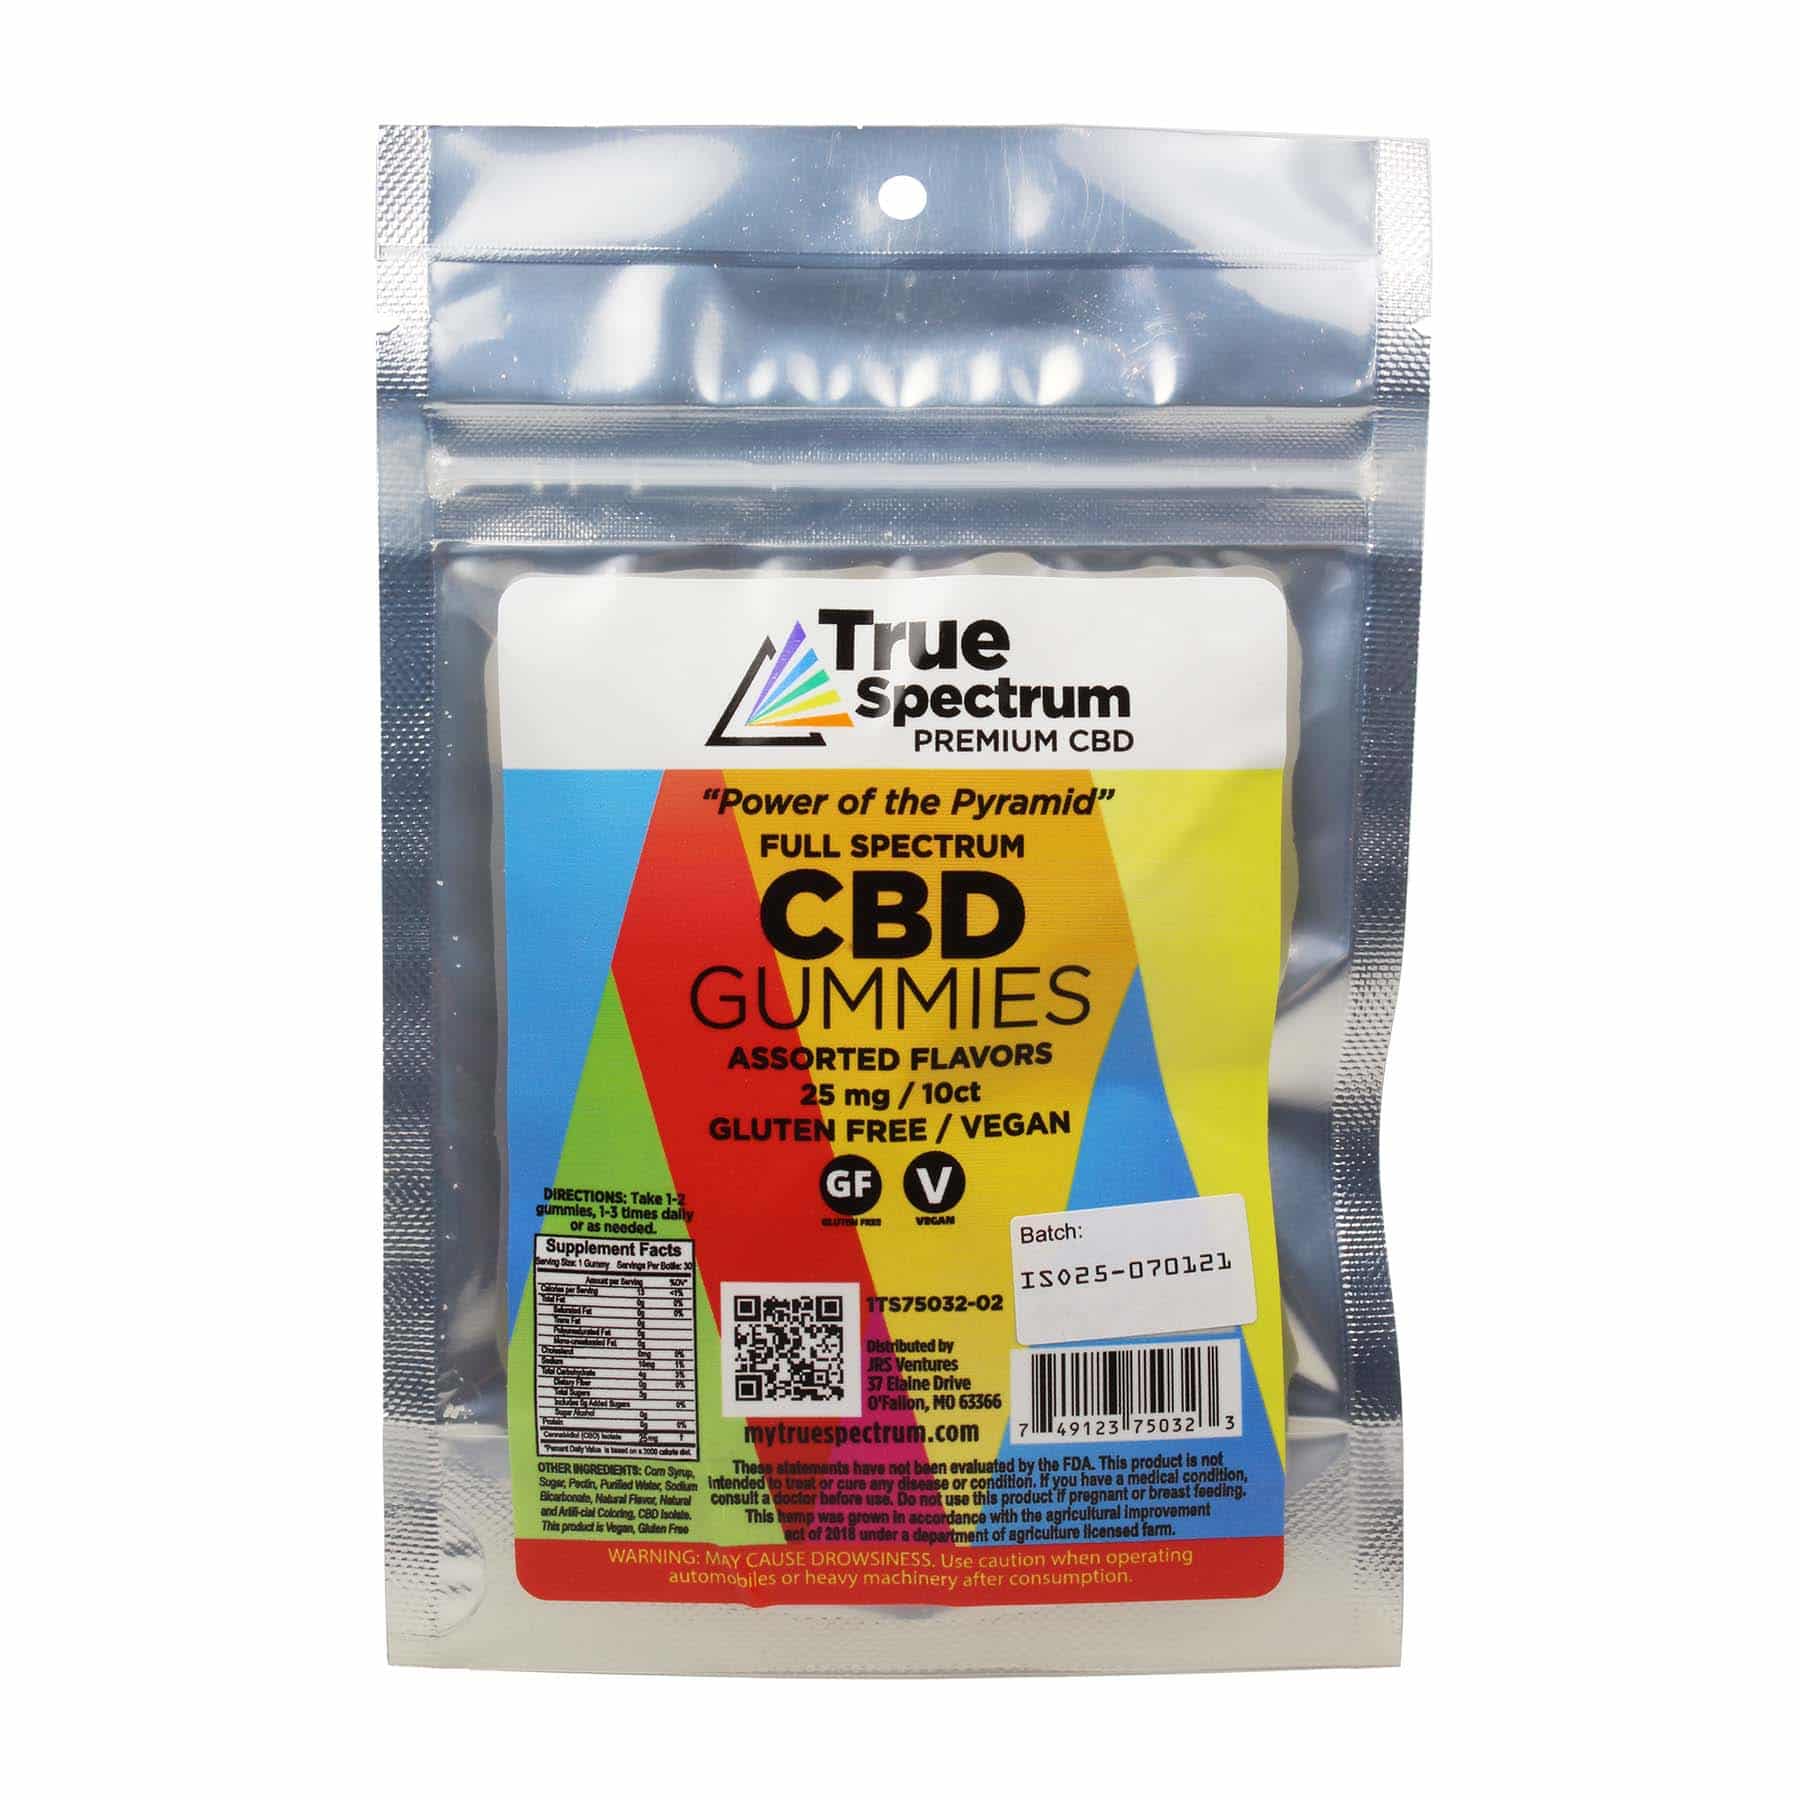 CBD Gummies BY My True Spectrum-The Ultimate Review of Top CBD Gummies